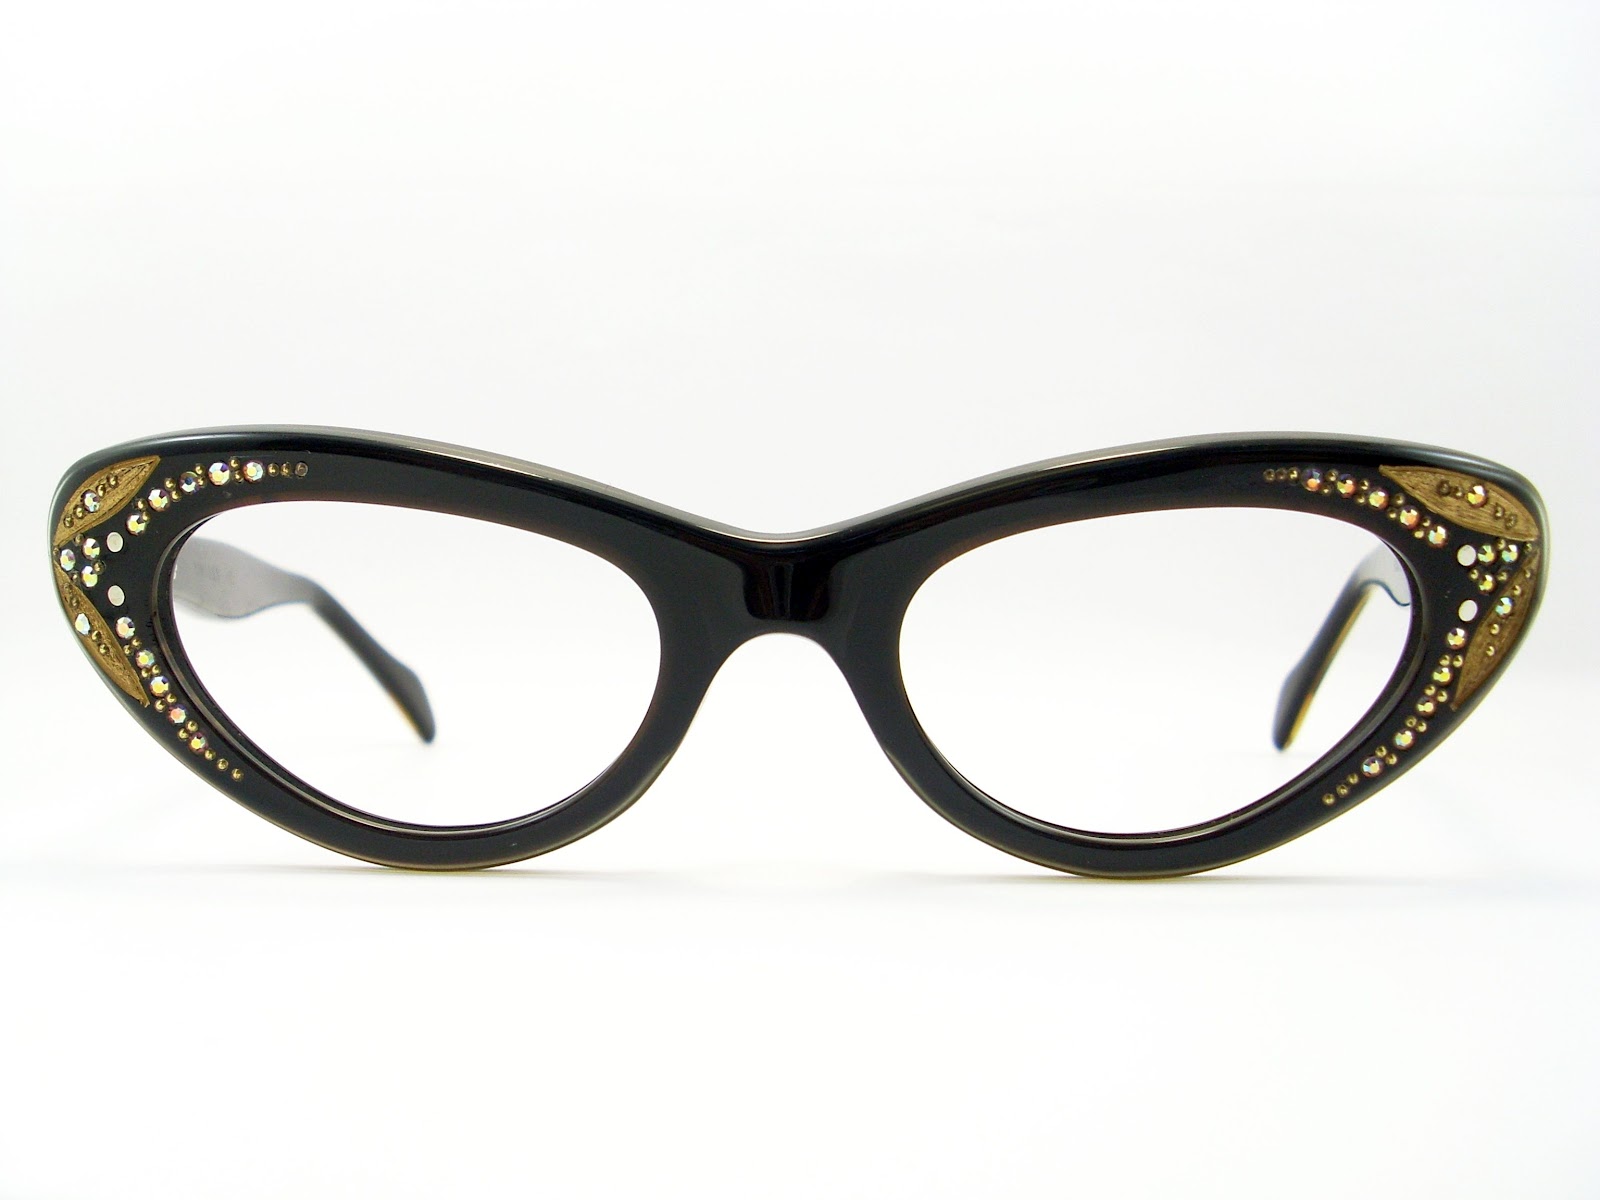 Vintage Eyeglasses Frames Eyewear Sunglasses 50s Vintage Glasses